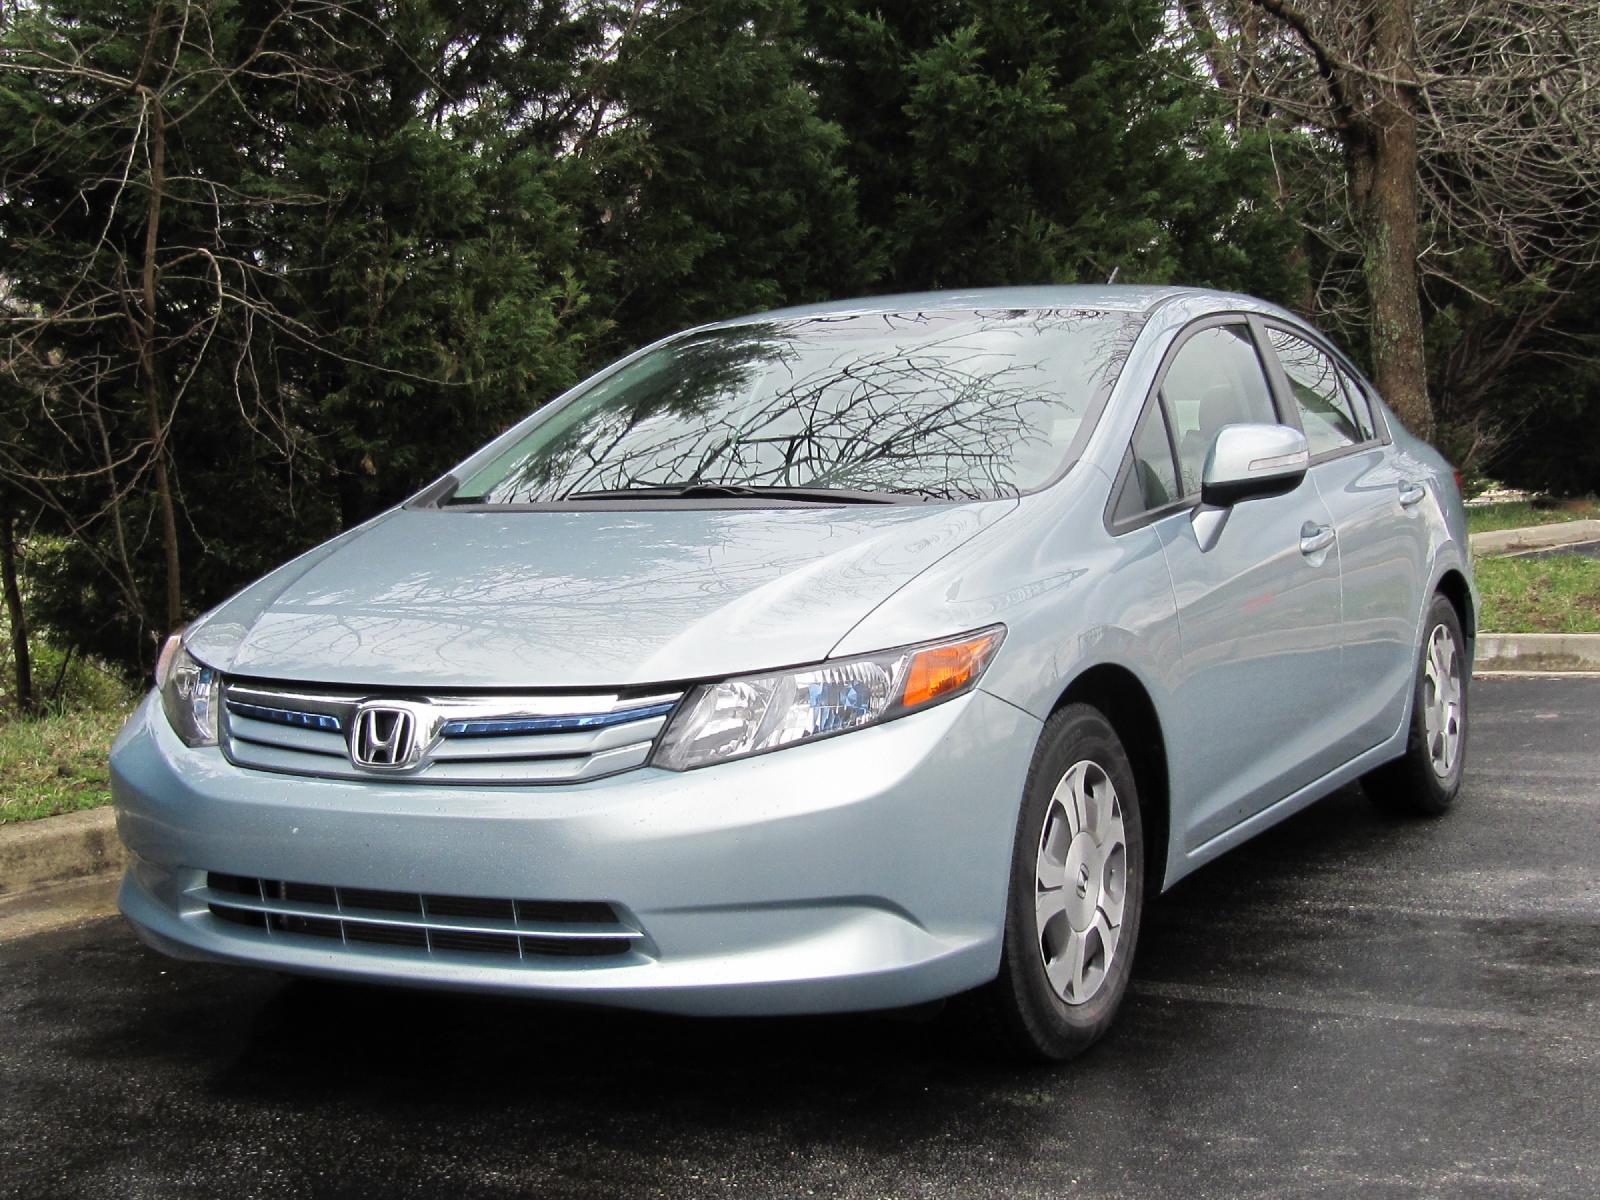 2012 Honda Civic Hybrid: Multi-Day Drive Review